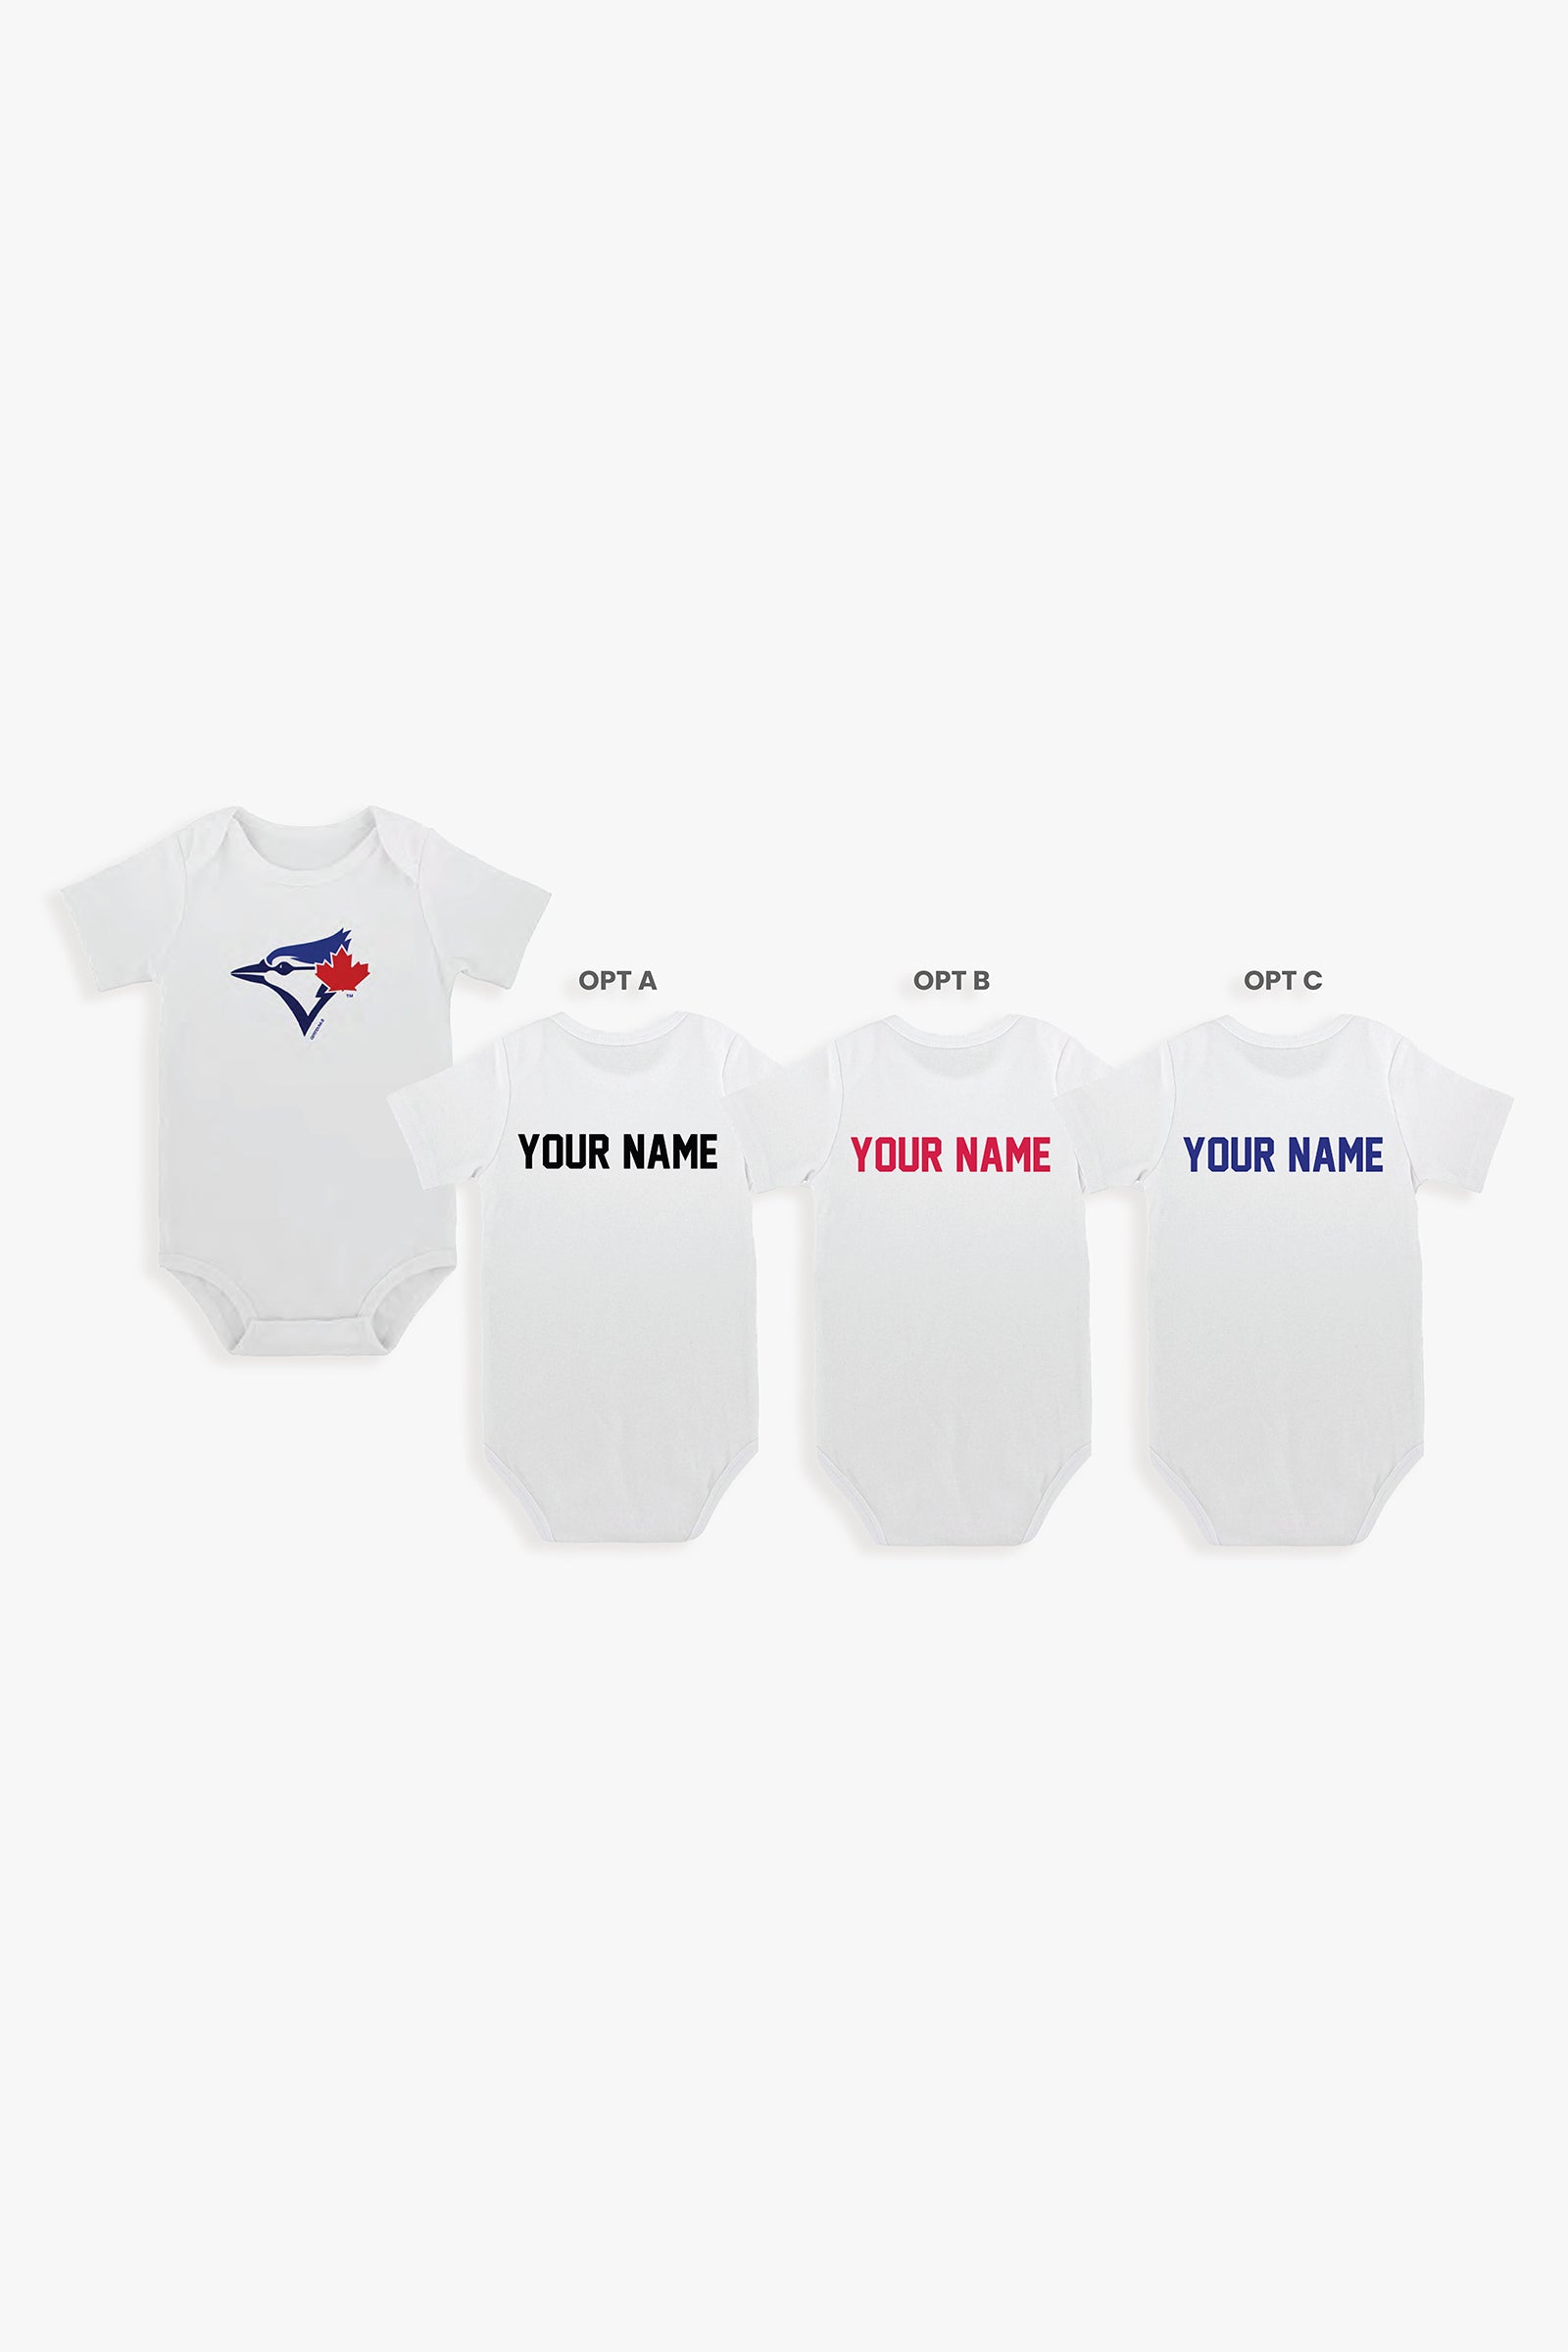 Customizable MLB Baby Bodysuit in White (18-24 Months)